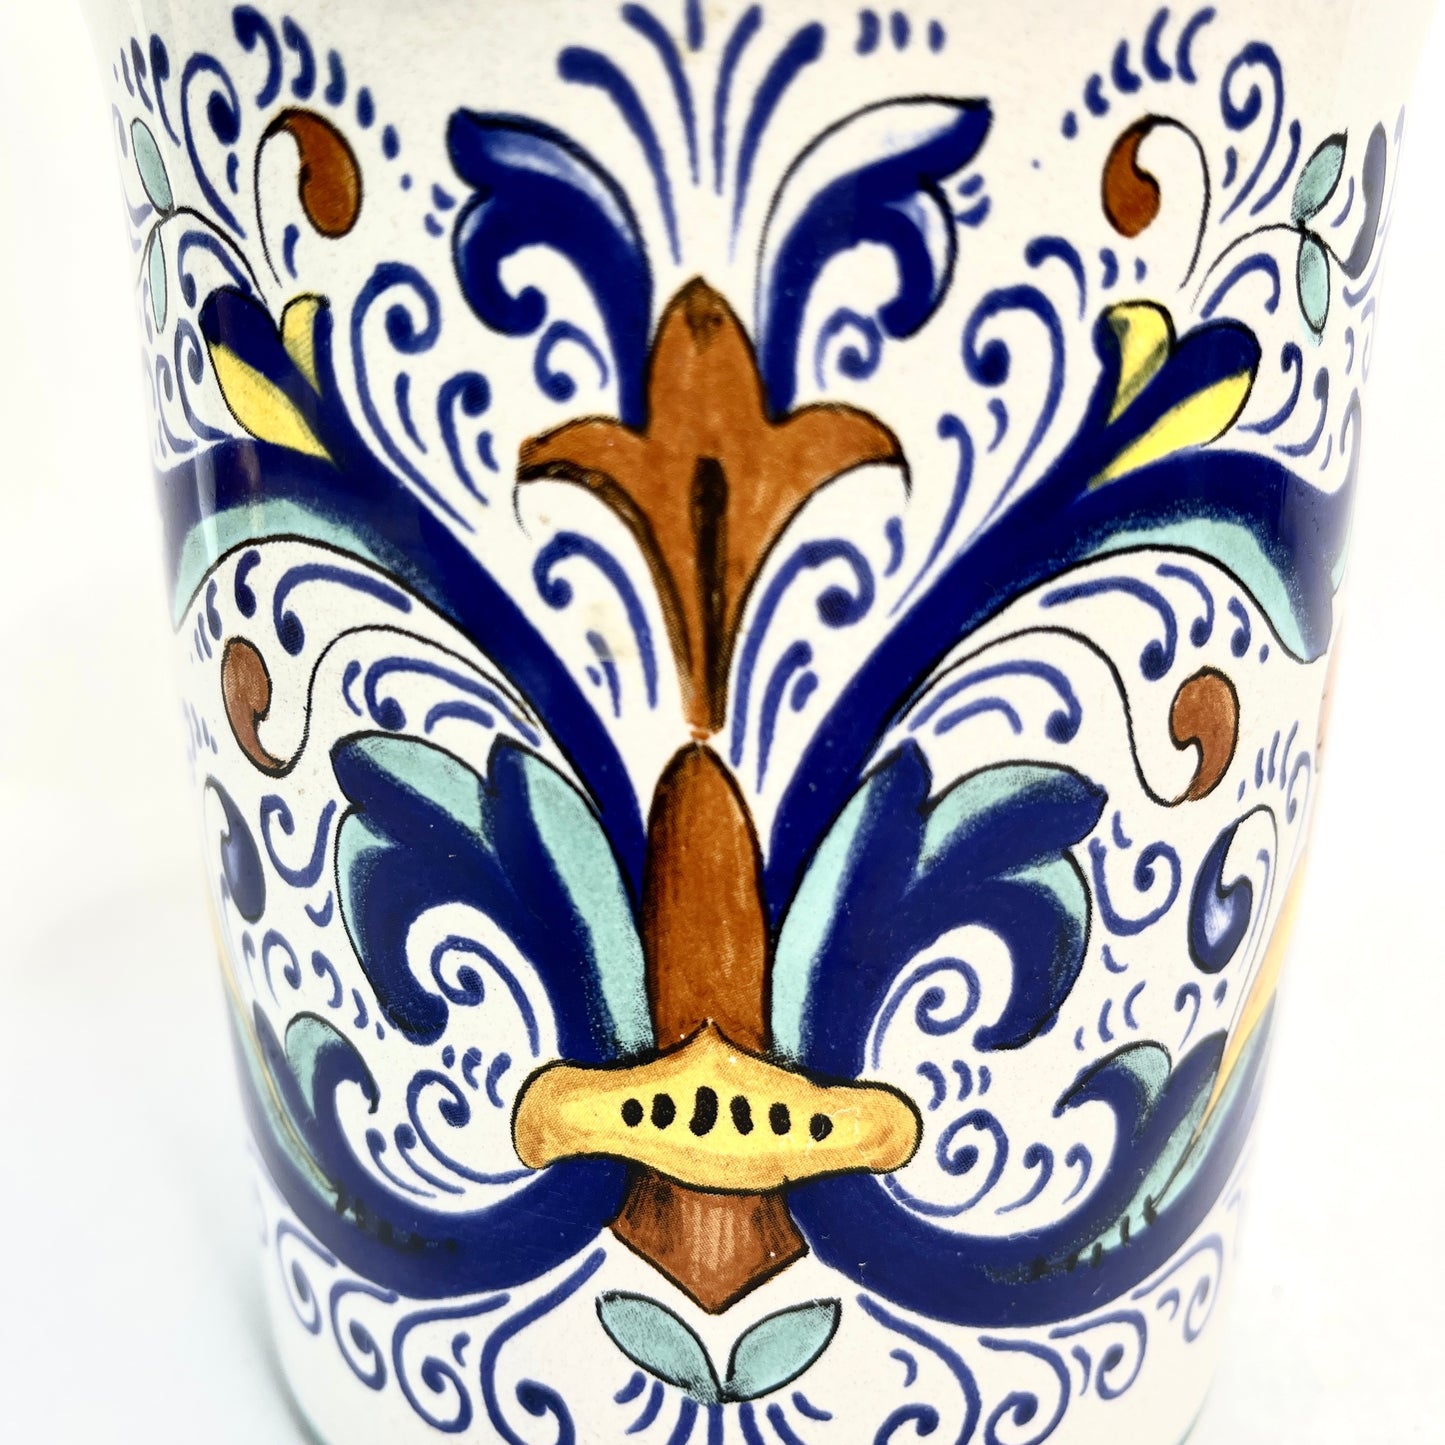 Vintage DeRuta Utensil Holder - Hand painted Italian Pottery